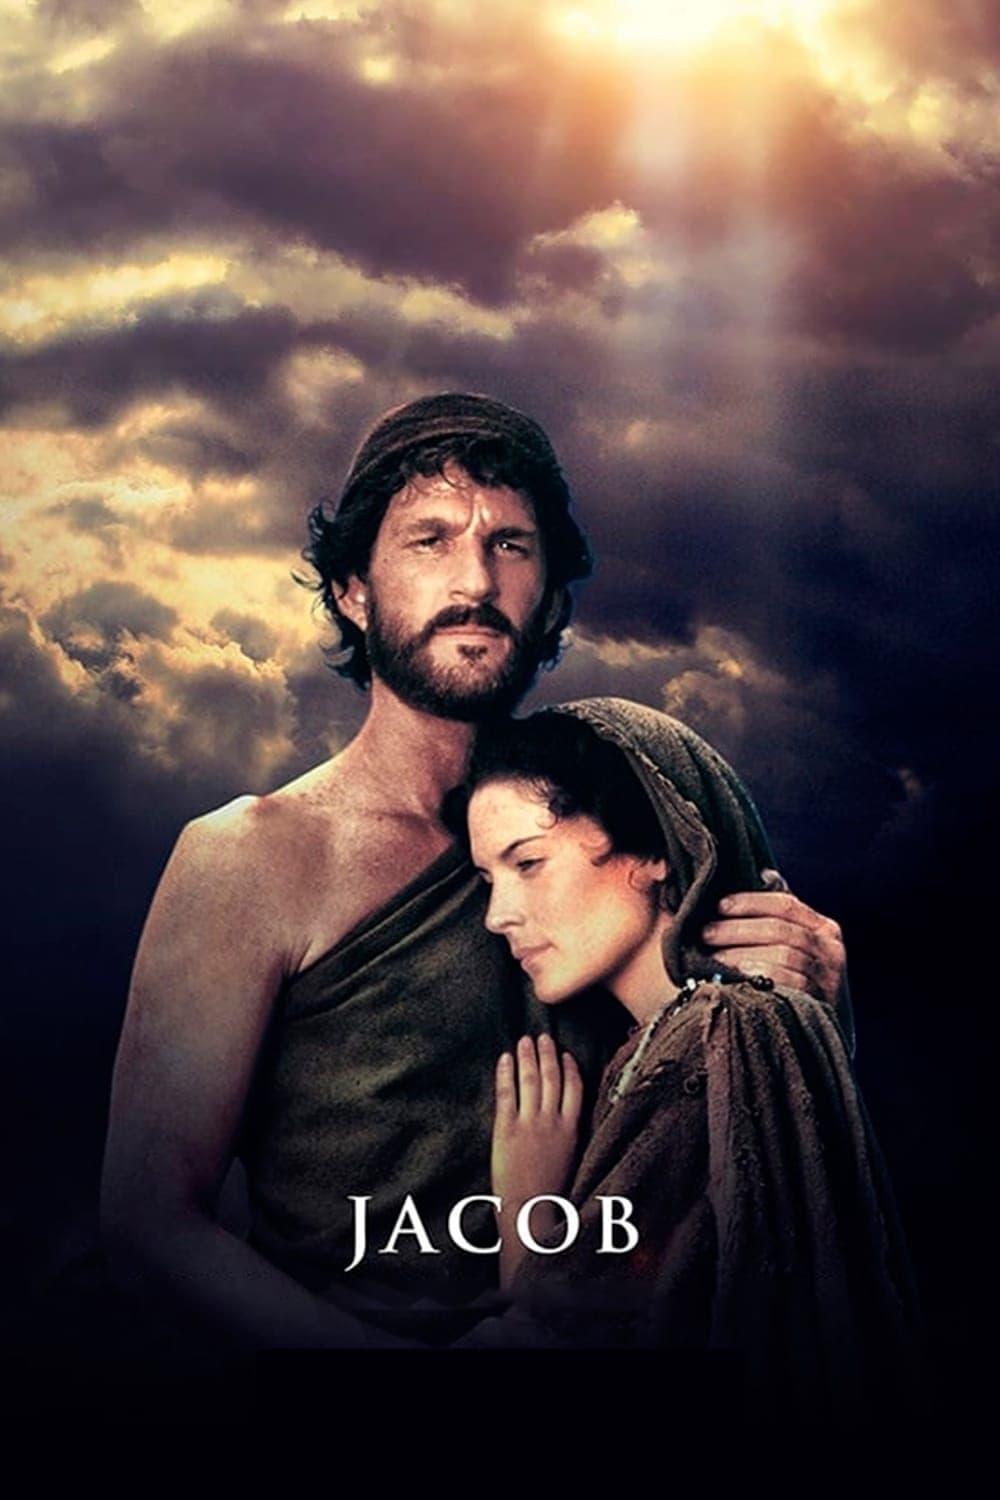 Jacob poster